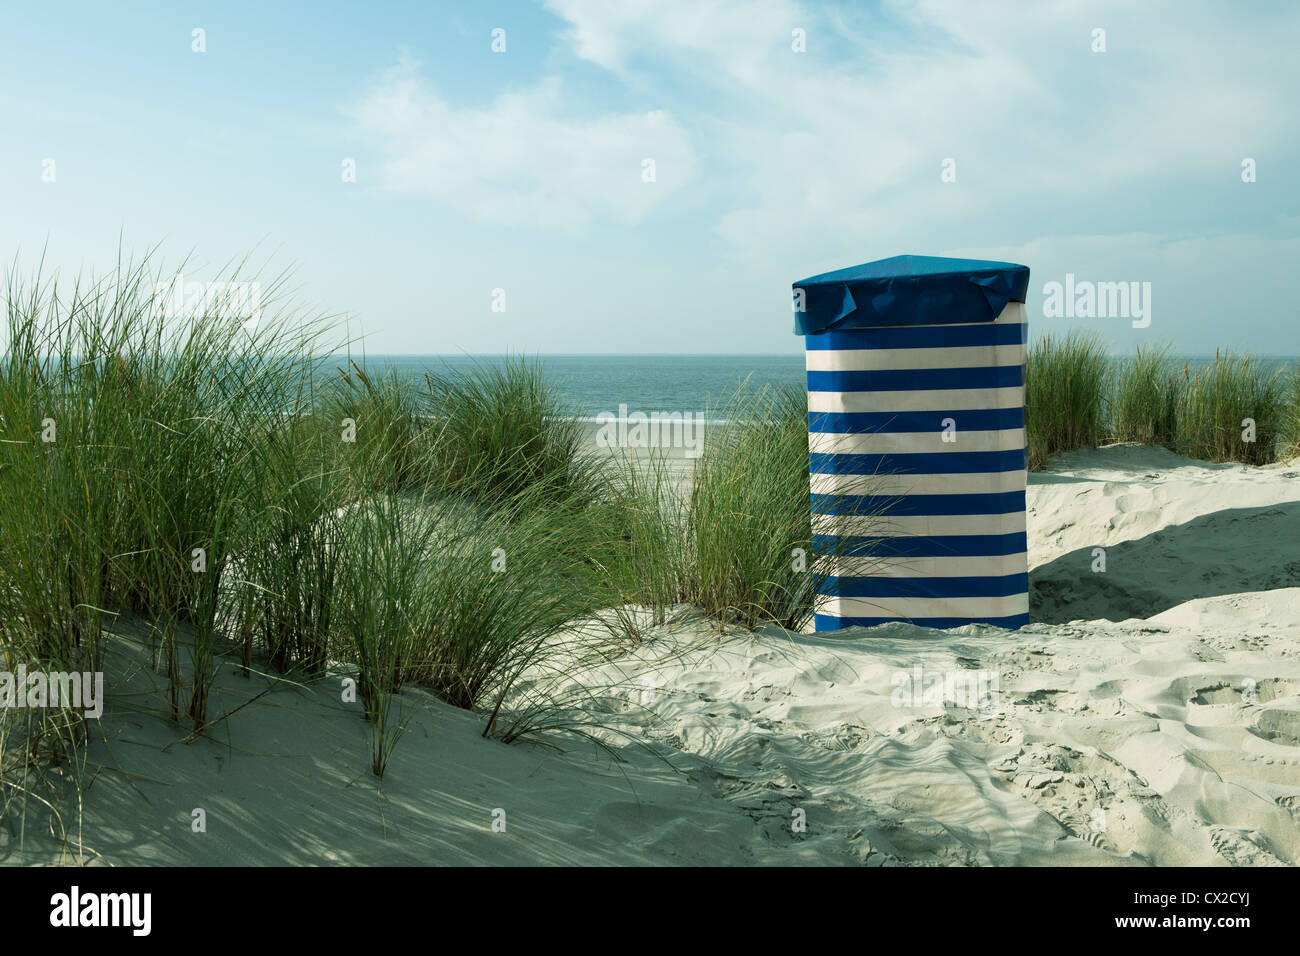 Beach, Borkum, Germany, dune, nature, sky, clouds, dune landscape, relax, island, north sea, summertime, tourism, width, grass Stock Photo